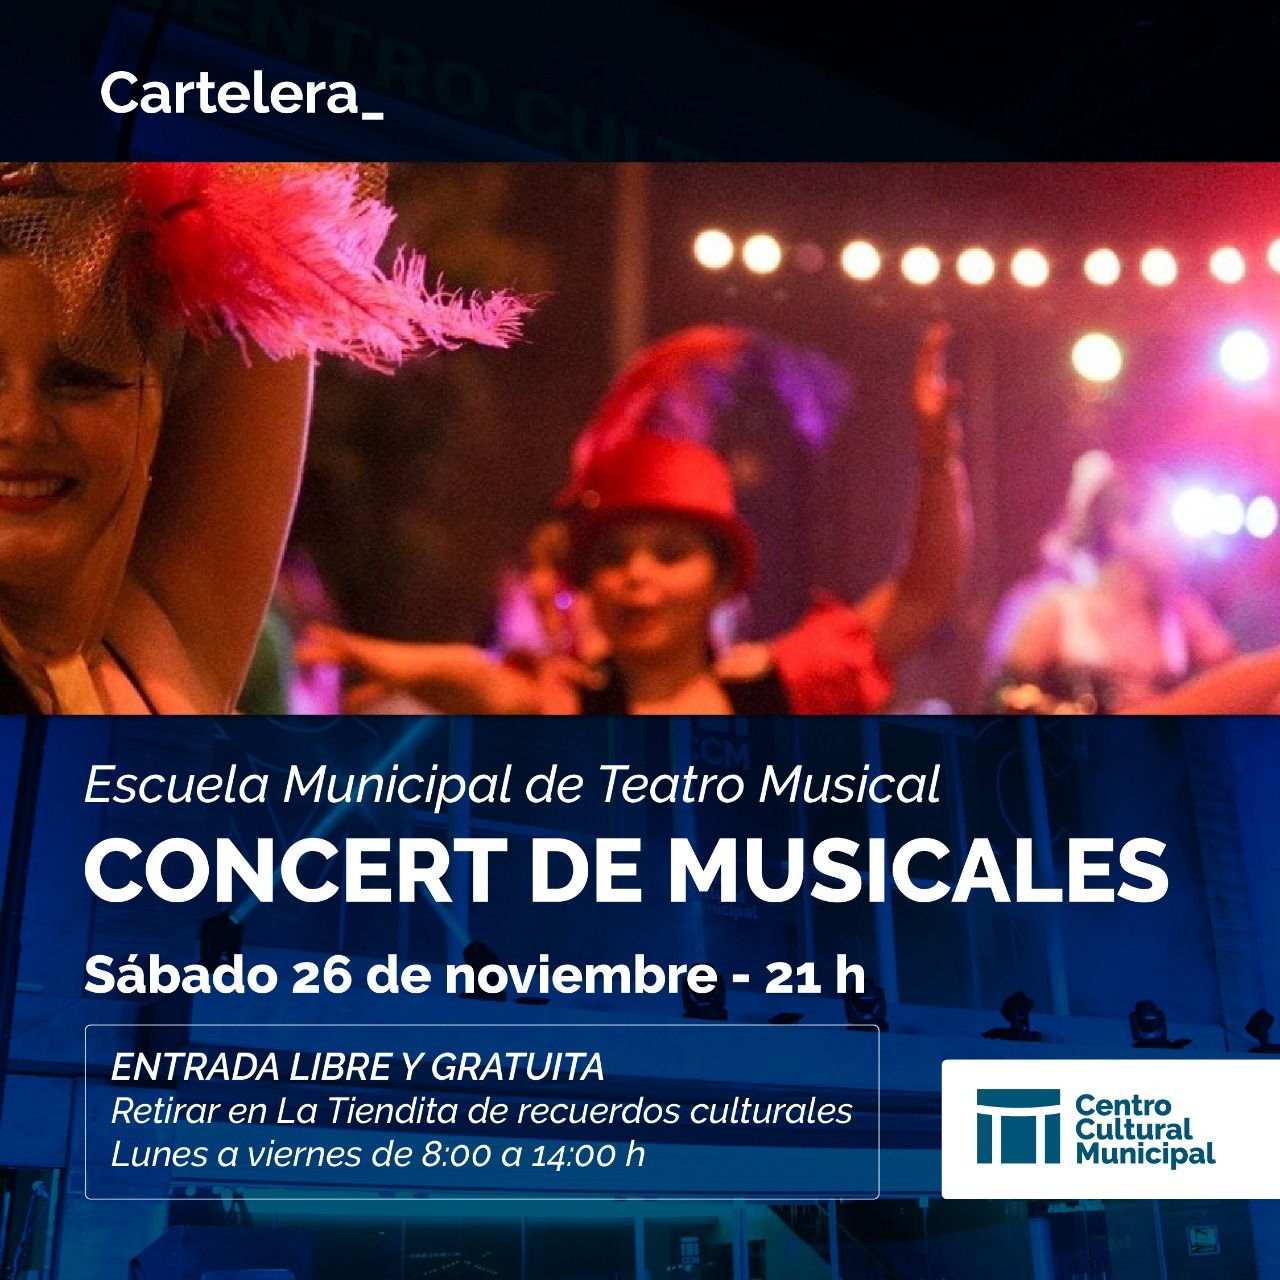 “Concert de Musicales” en el Centro Cultural Municipal